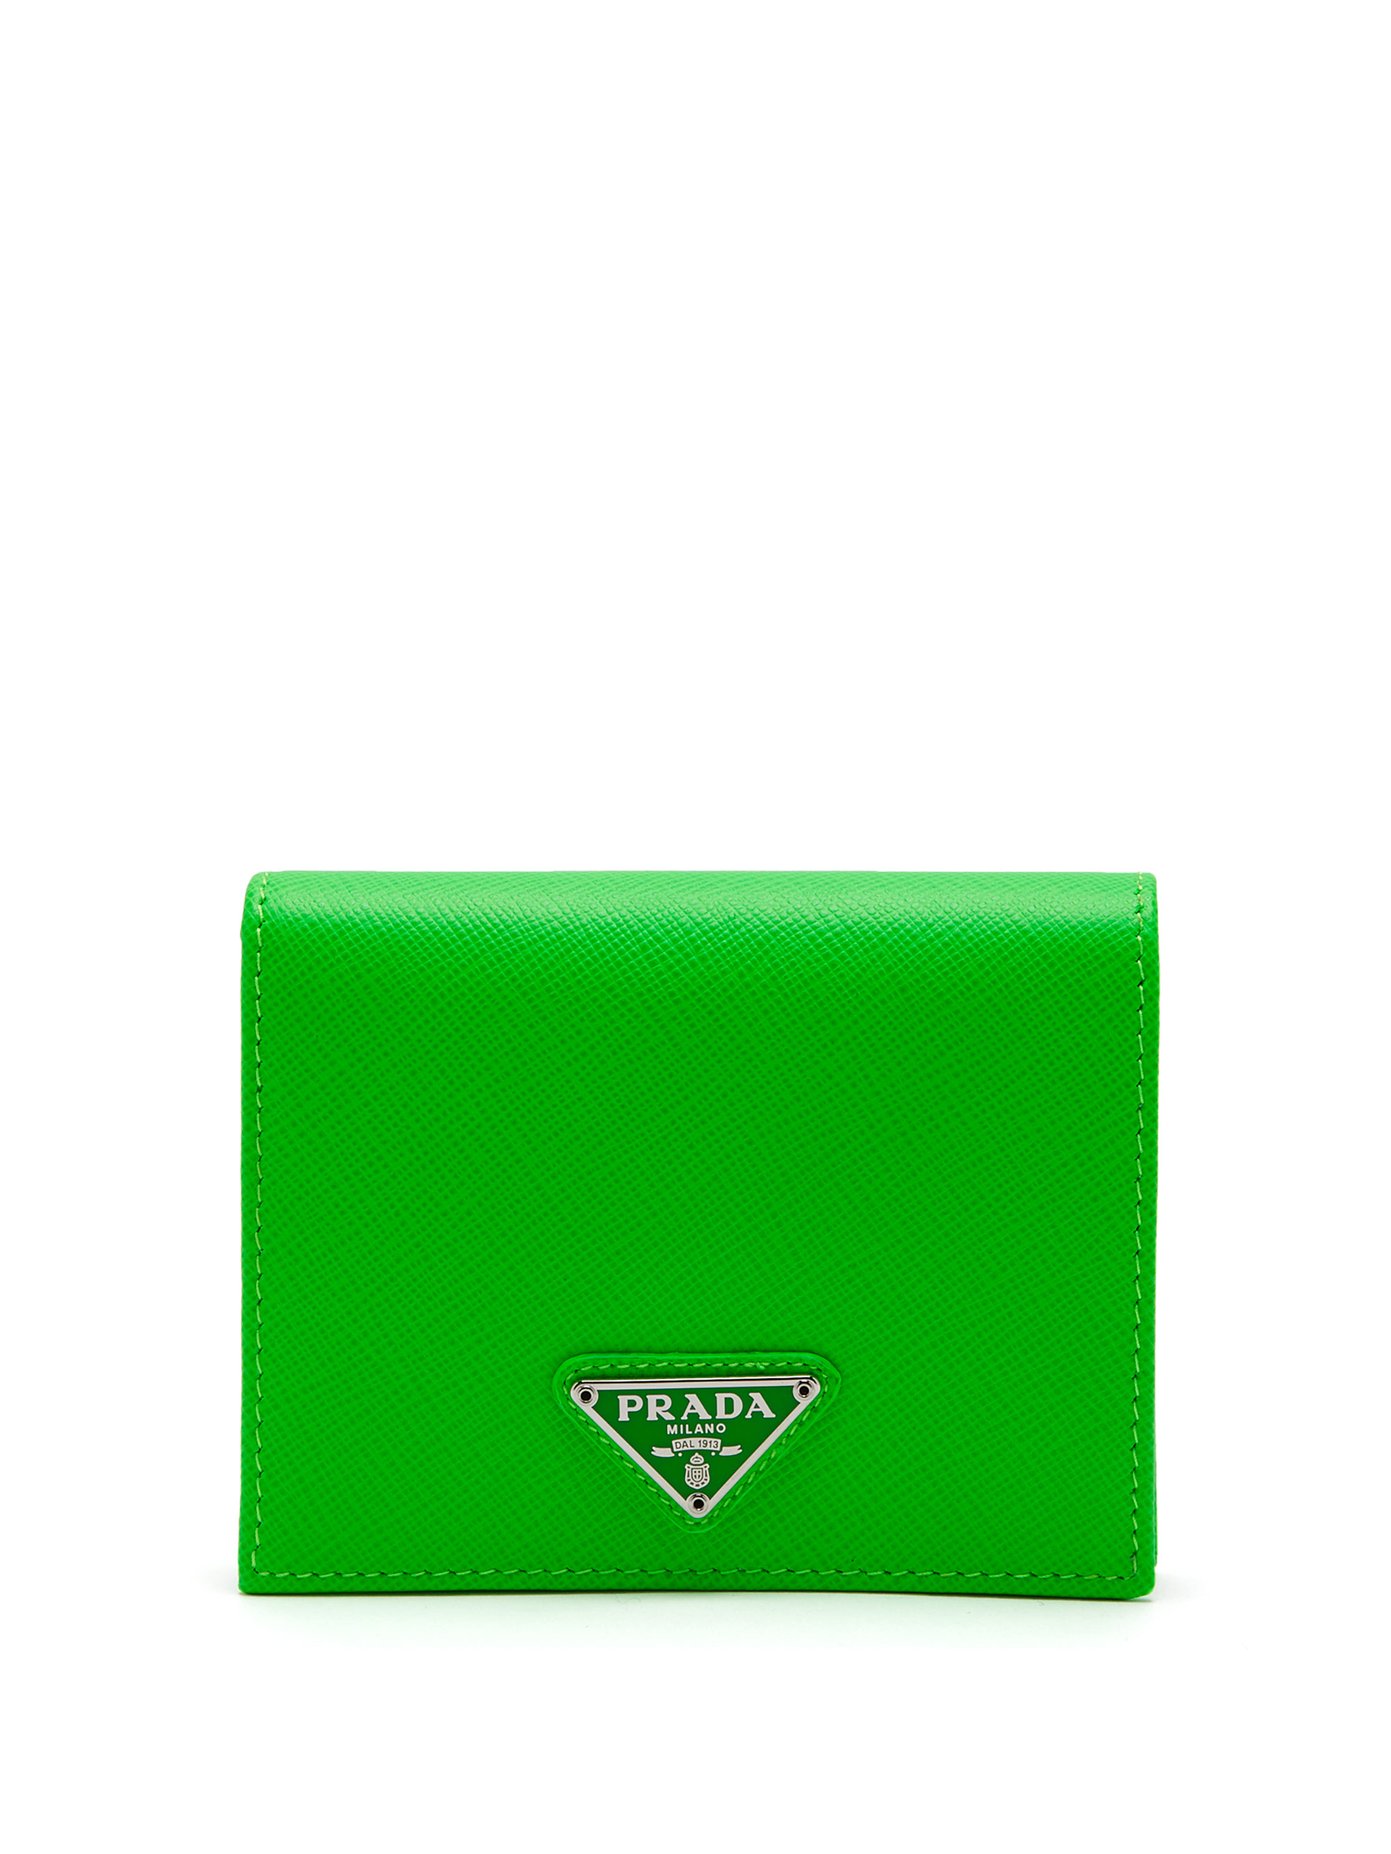 prada wallet green